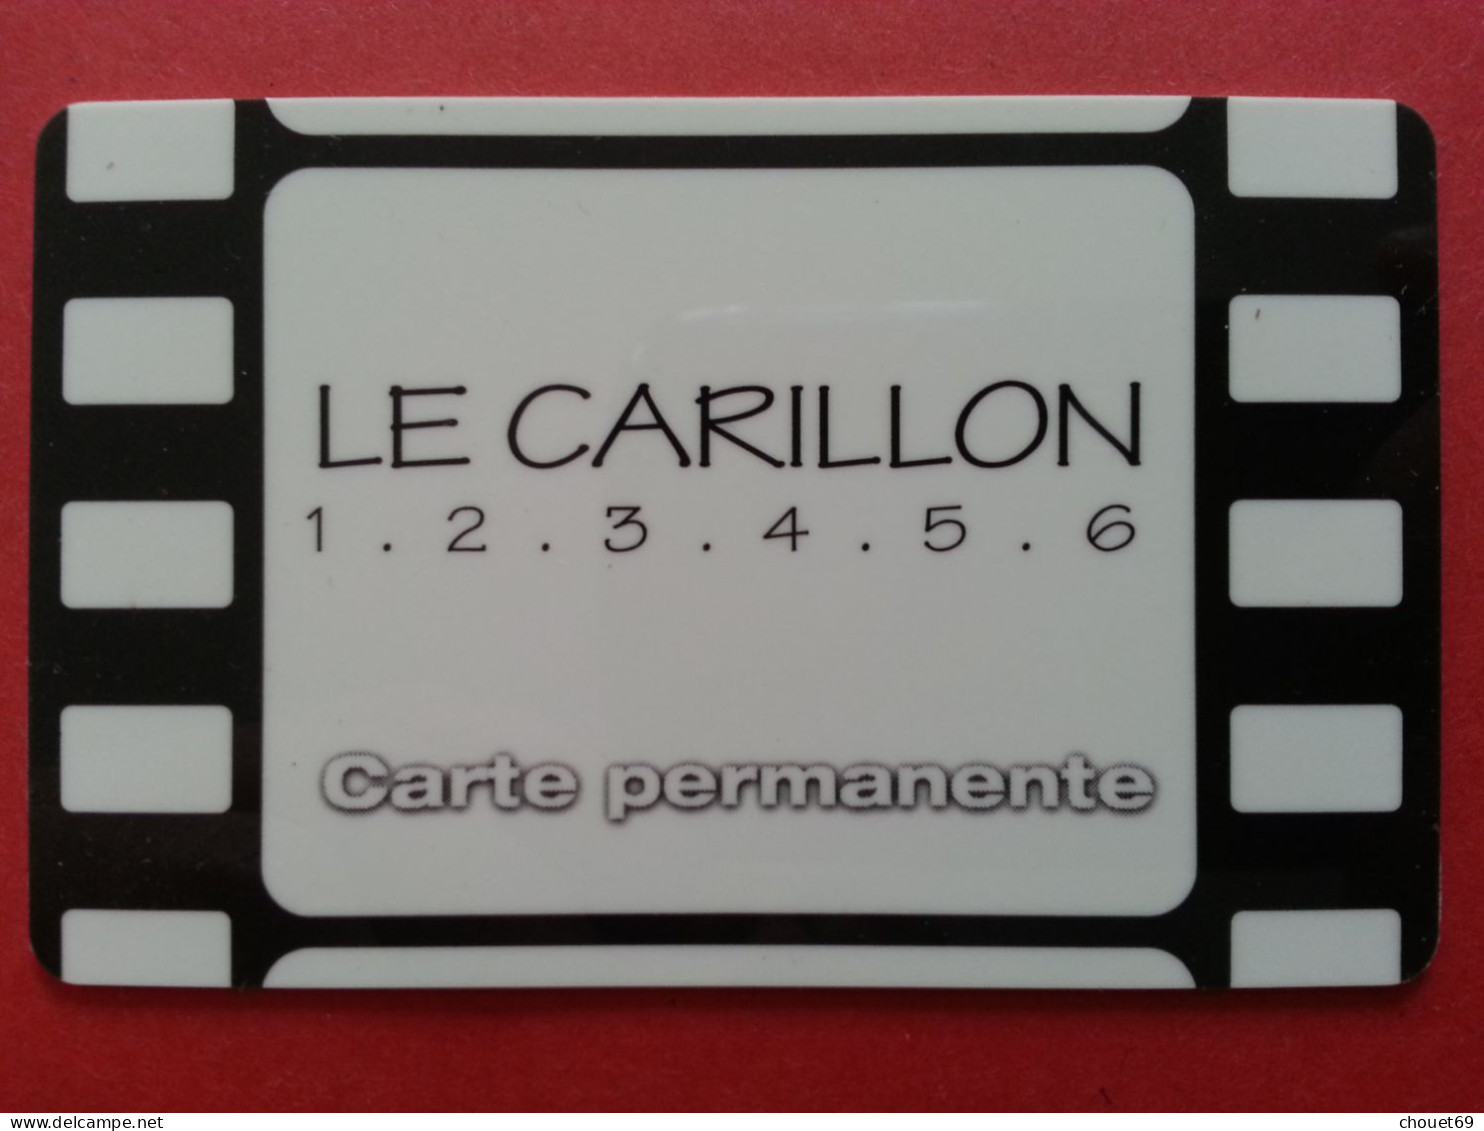 Cinécarte Le Carillon Carte Permanente 1.2.3.4.5.6 (BH0621 - Cinécartes